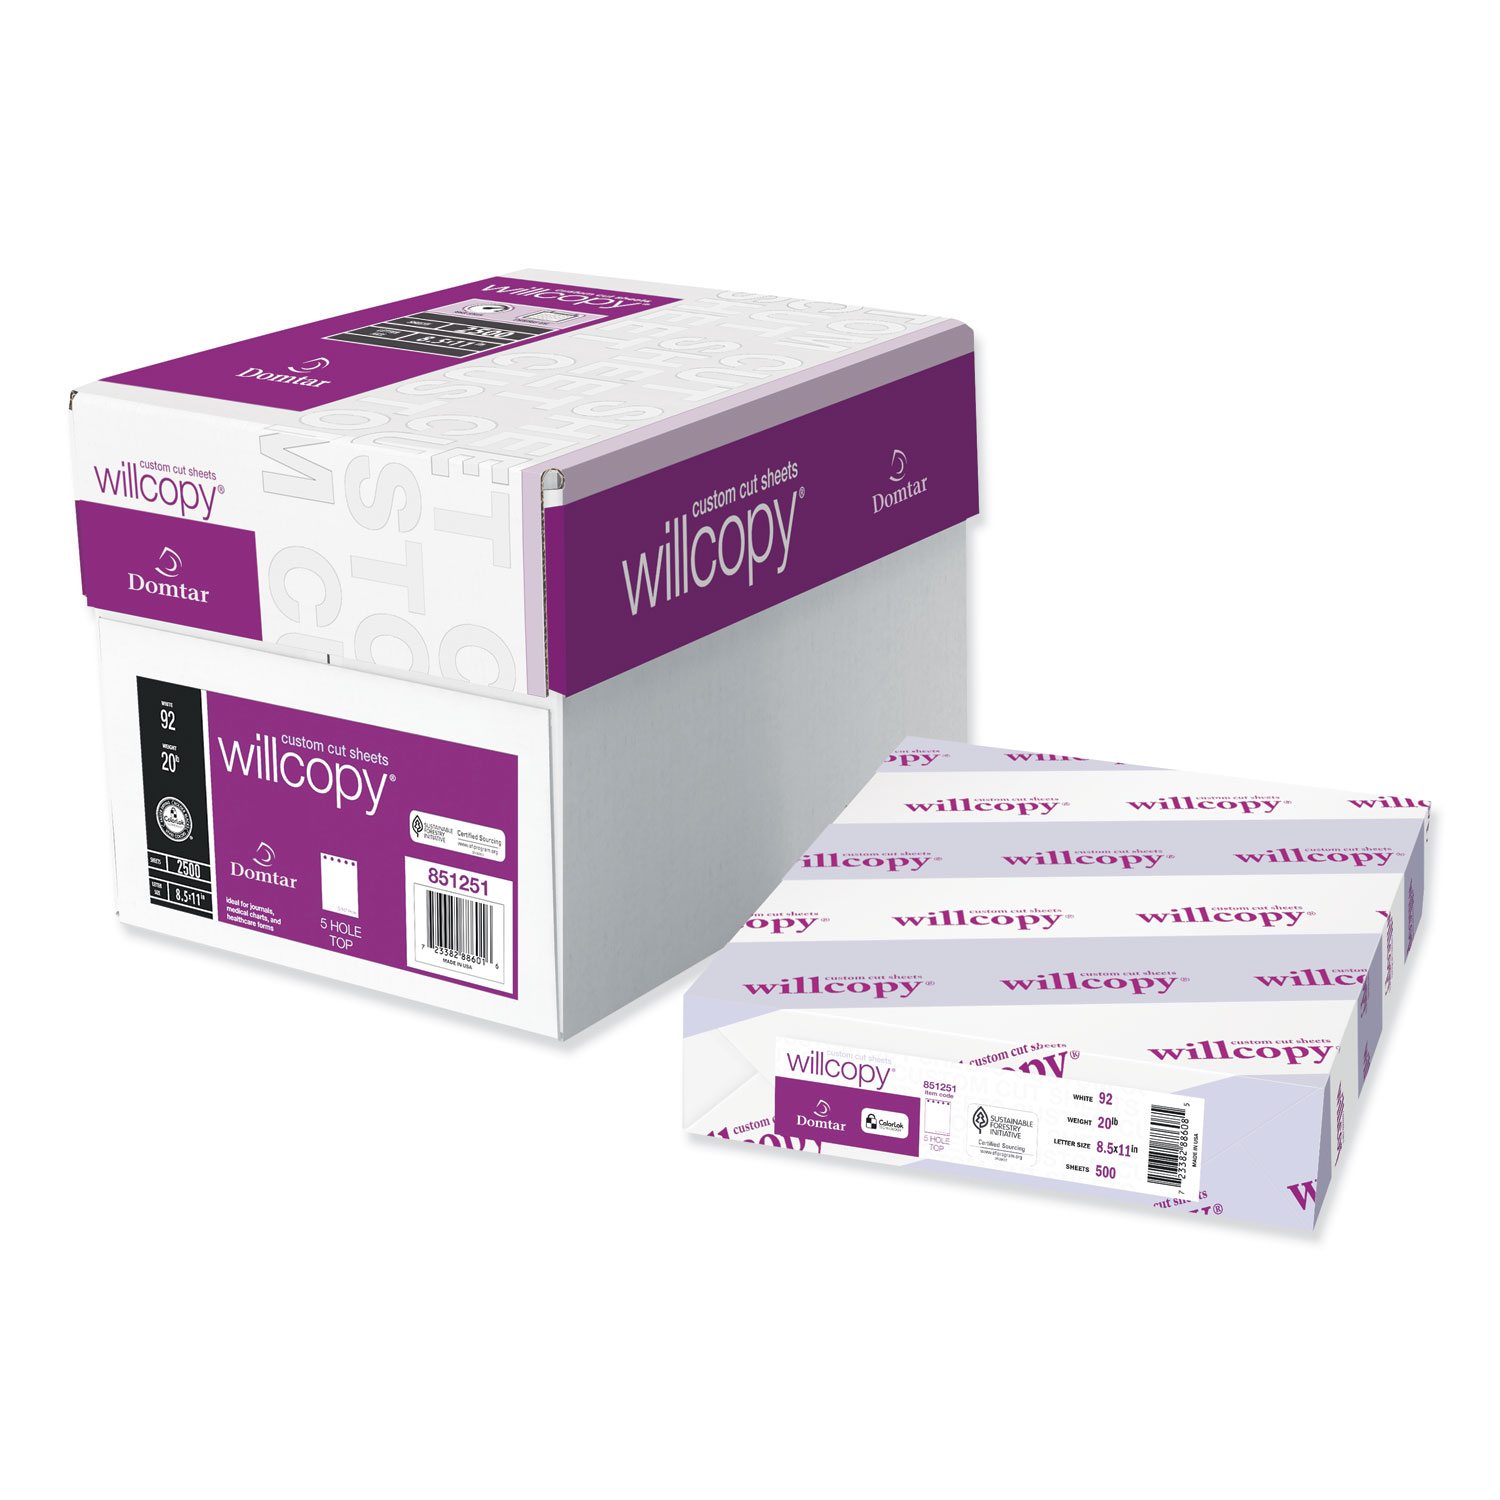  Domtar 851055 Custom Cut-Sheet Copy Paper, 92 Bright, 20lb, 8.5 x 11, White, 500 Sheets/Ream, 5 Reams/Carton (DMR851055) 